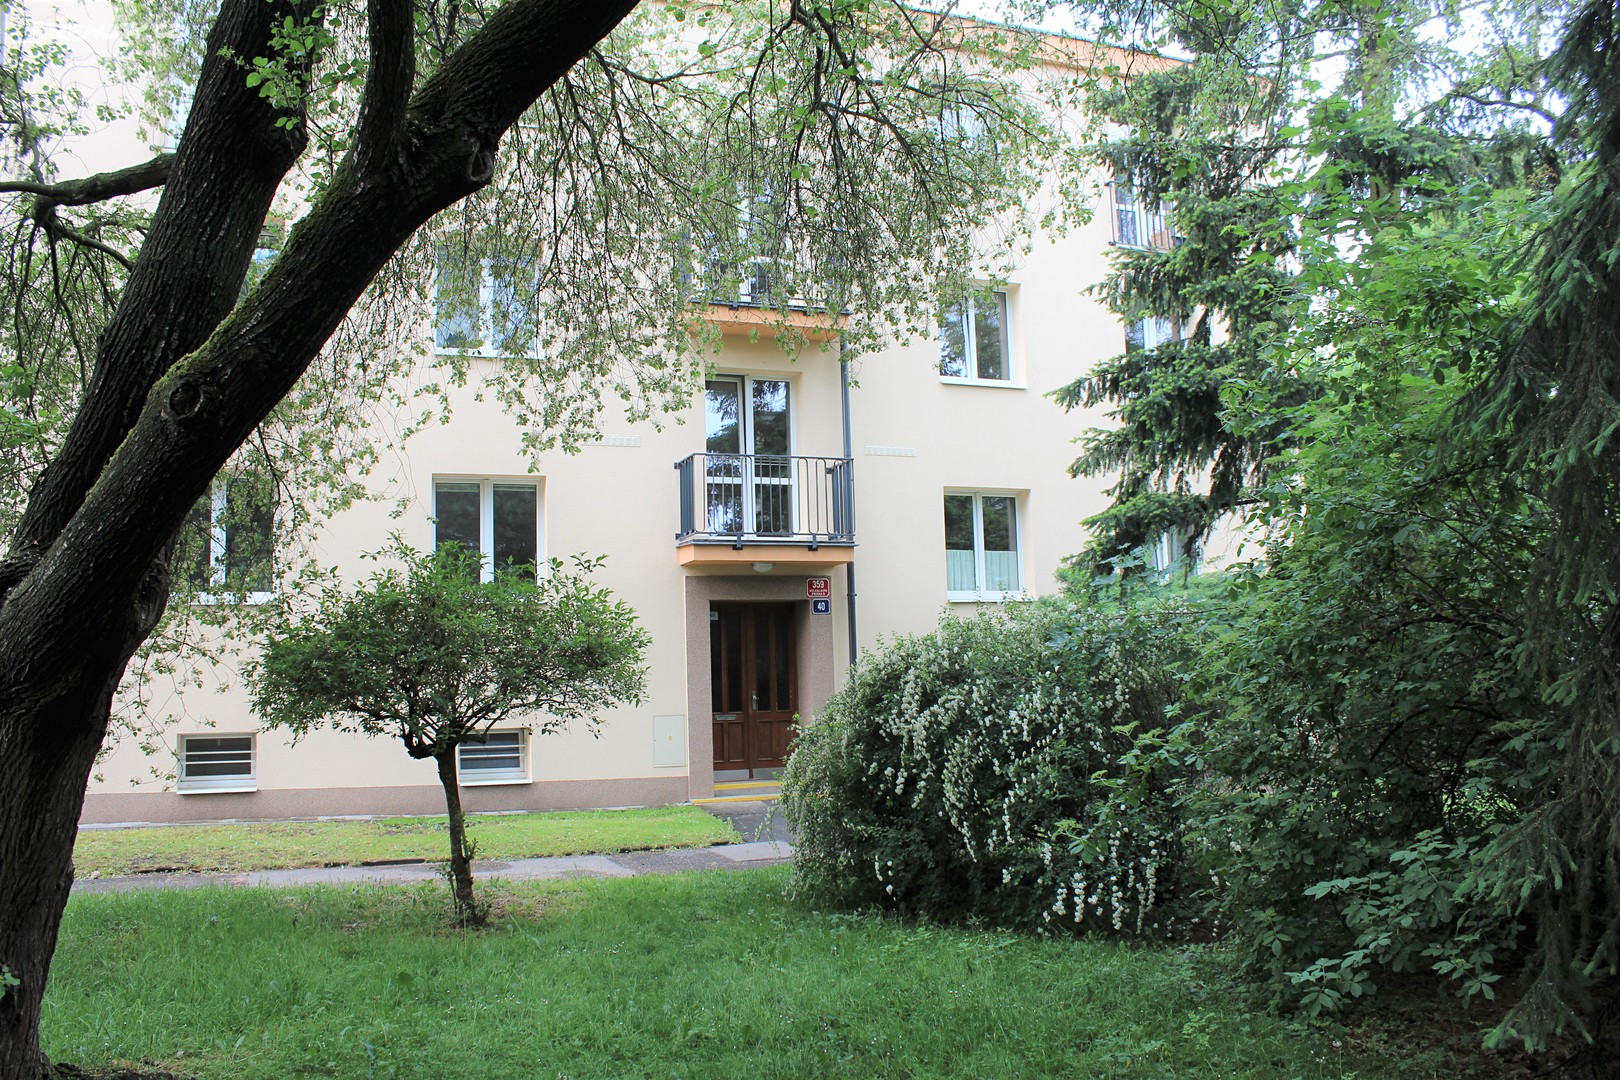 Pronájem bytu 2+1 53 m², Šumberova, Praha 6 - Veleslavín